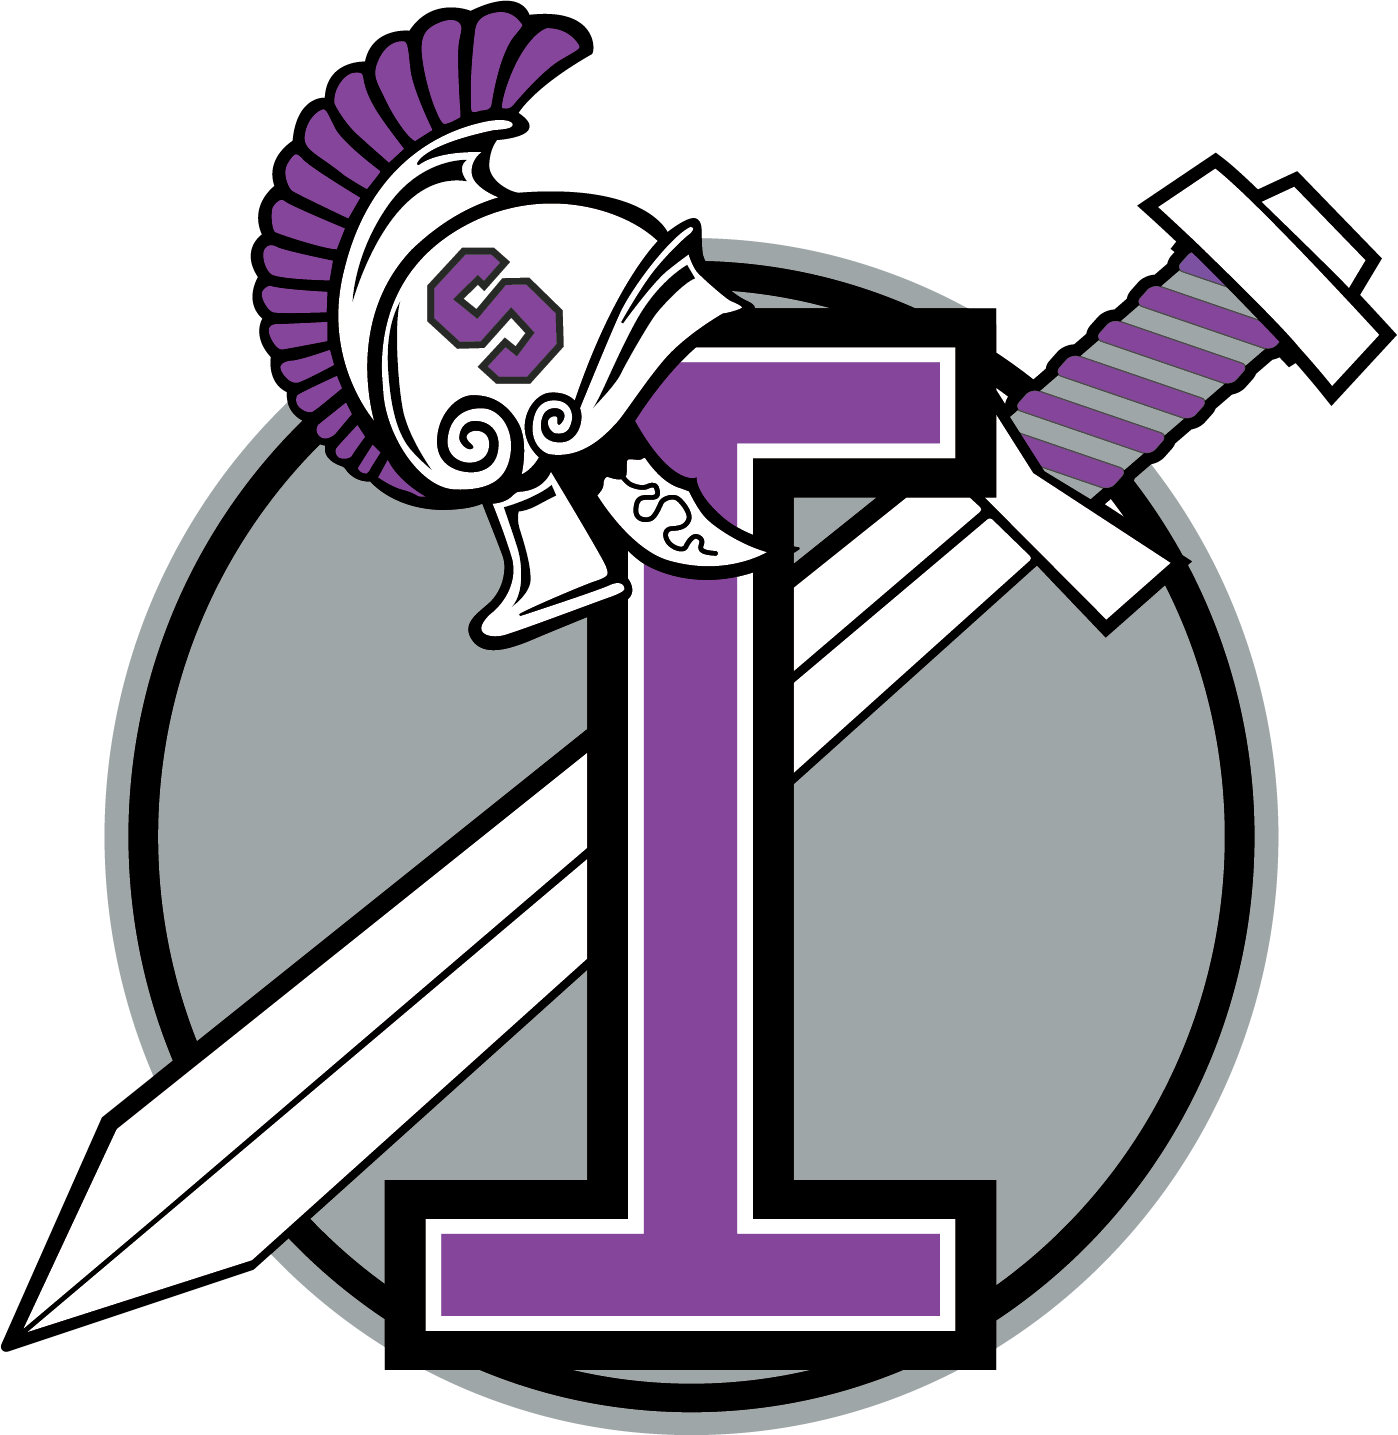 IMPACT Early College High School Logo of helmet